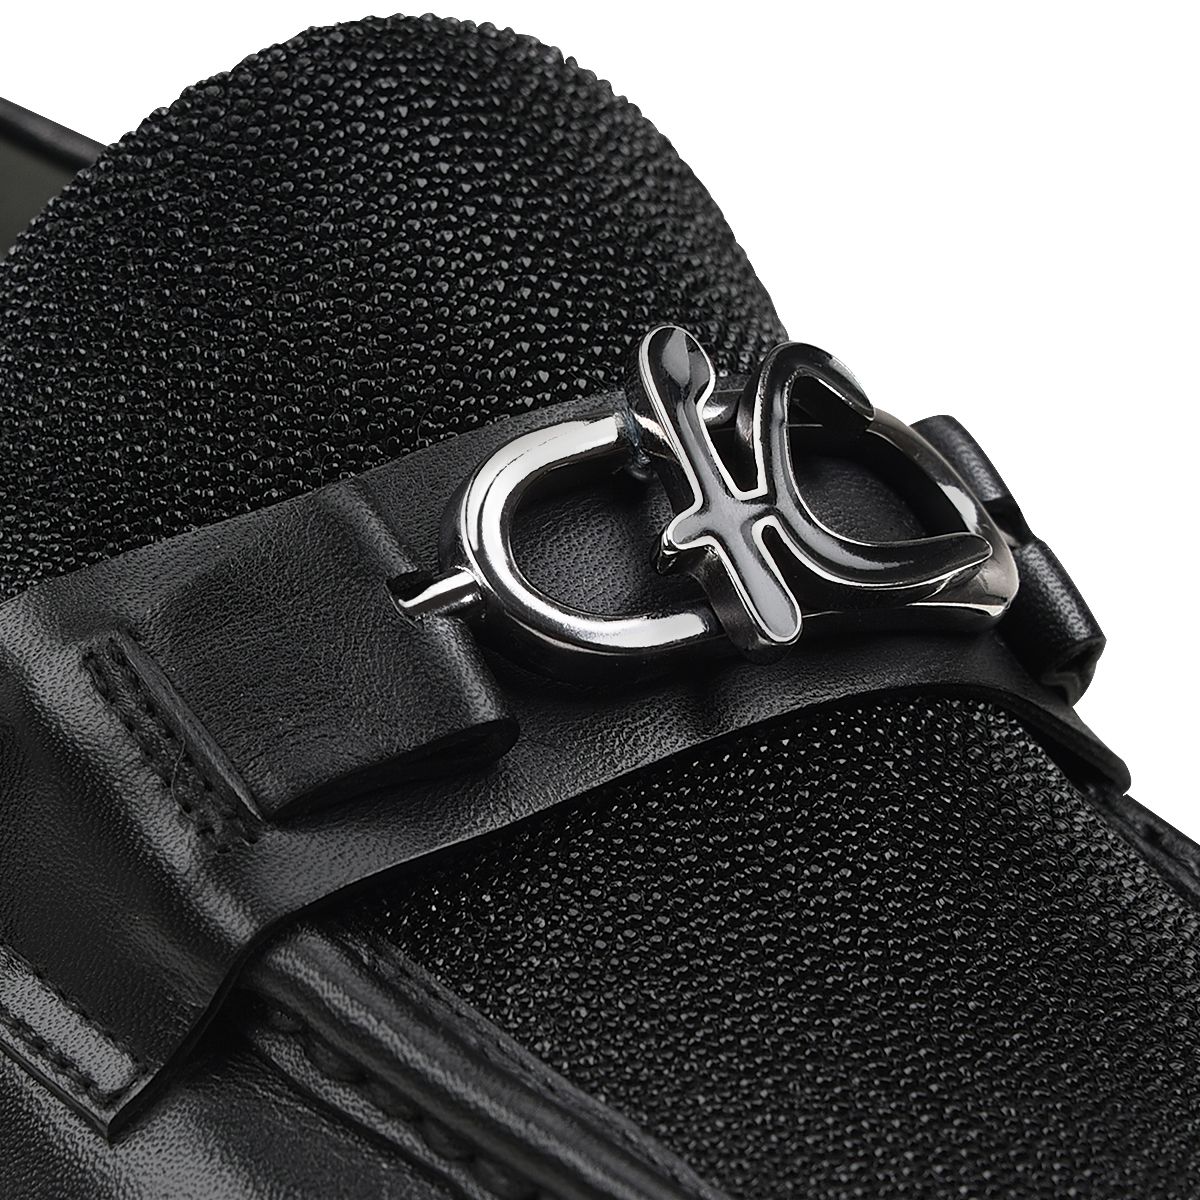 2D7MTTS - Cuadra black casual stingray leather platform bit moccasins for men-Franco Cuadra-Kuet-Cuadra-Boots